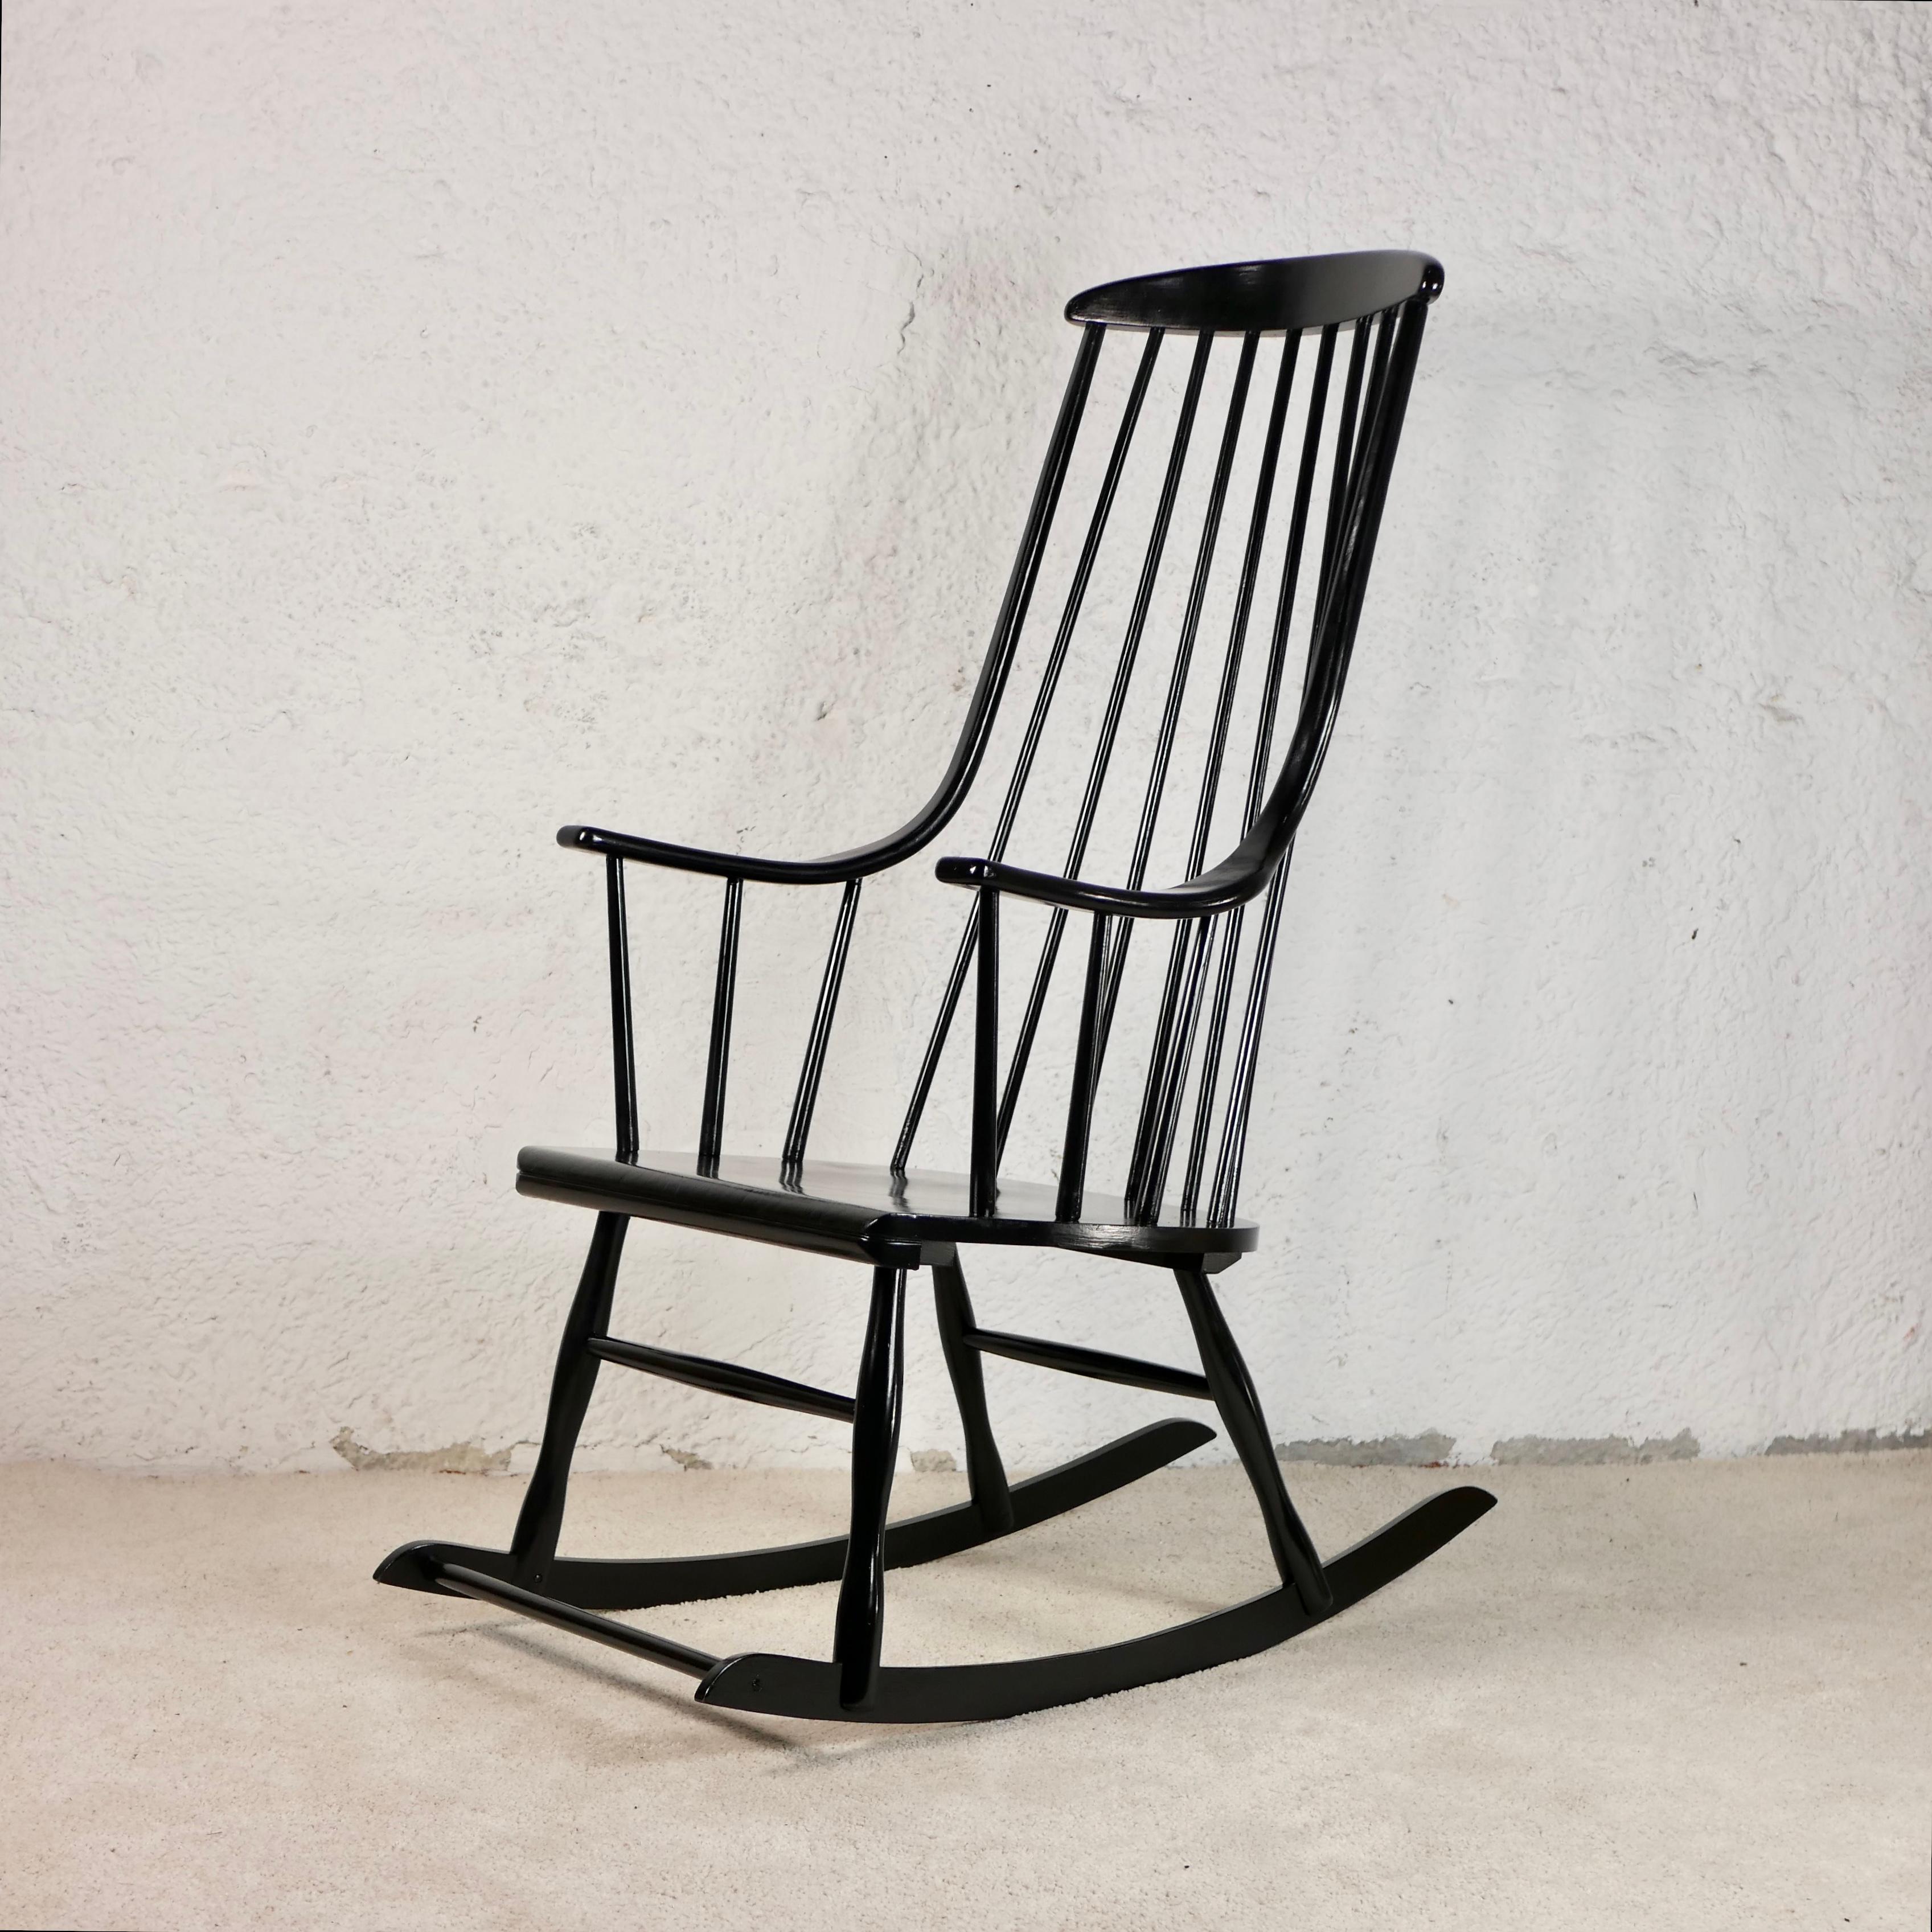 Lena Larsson's Grandessa Rocking-Chair 1